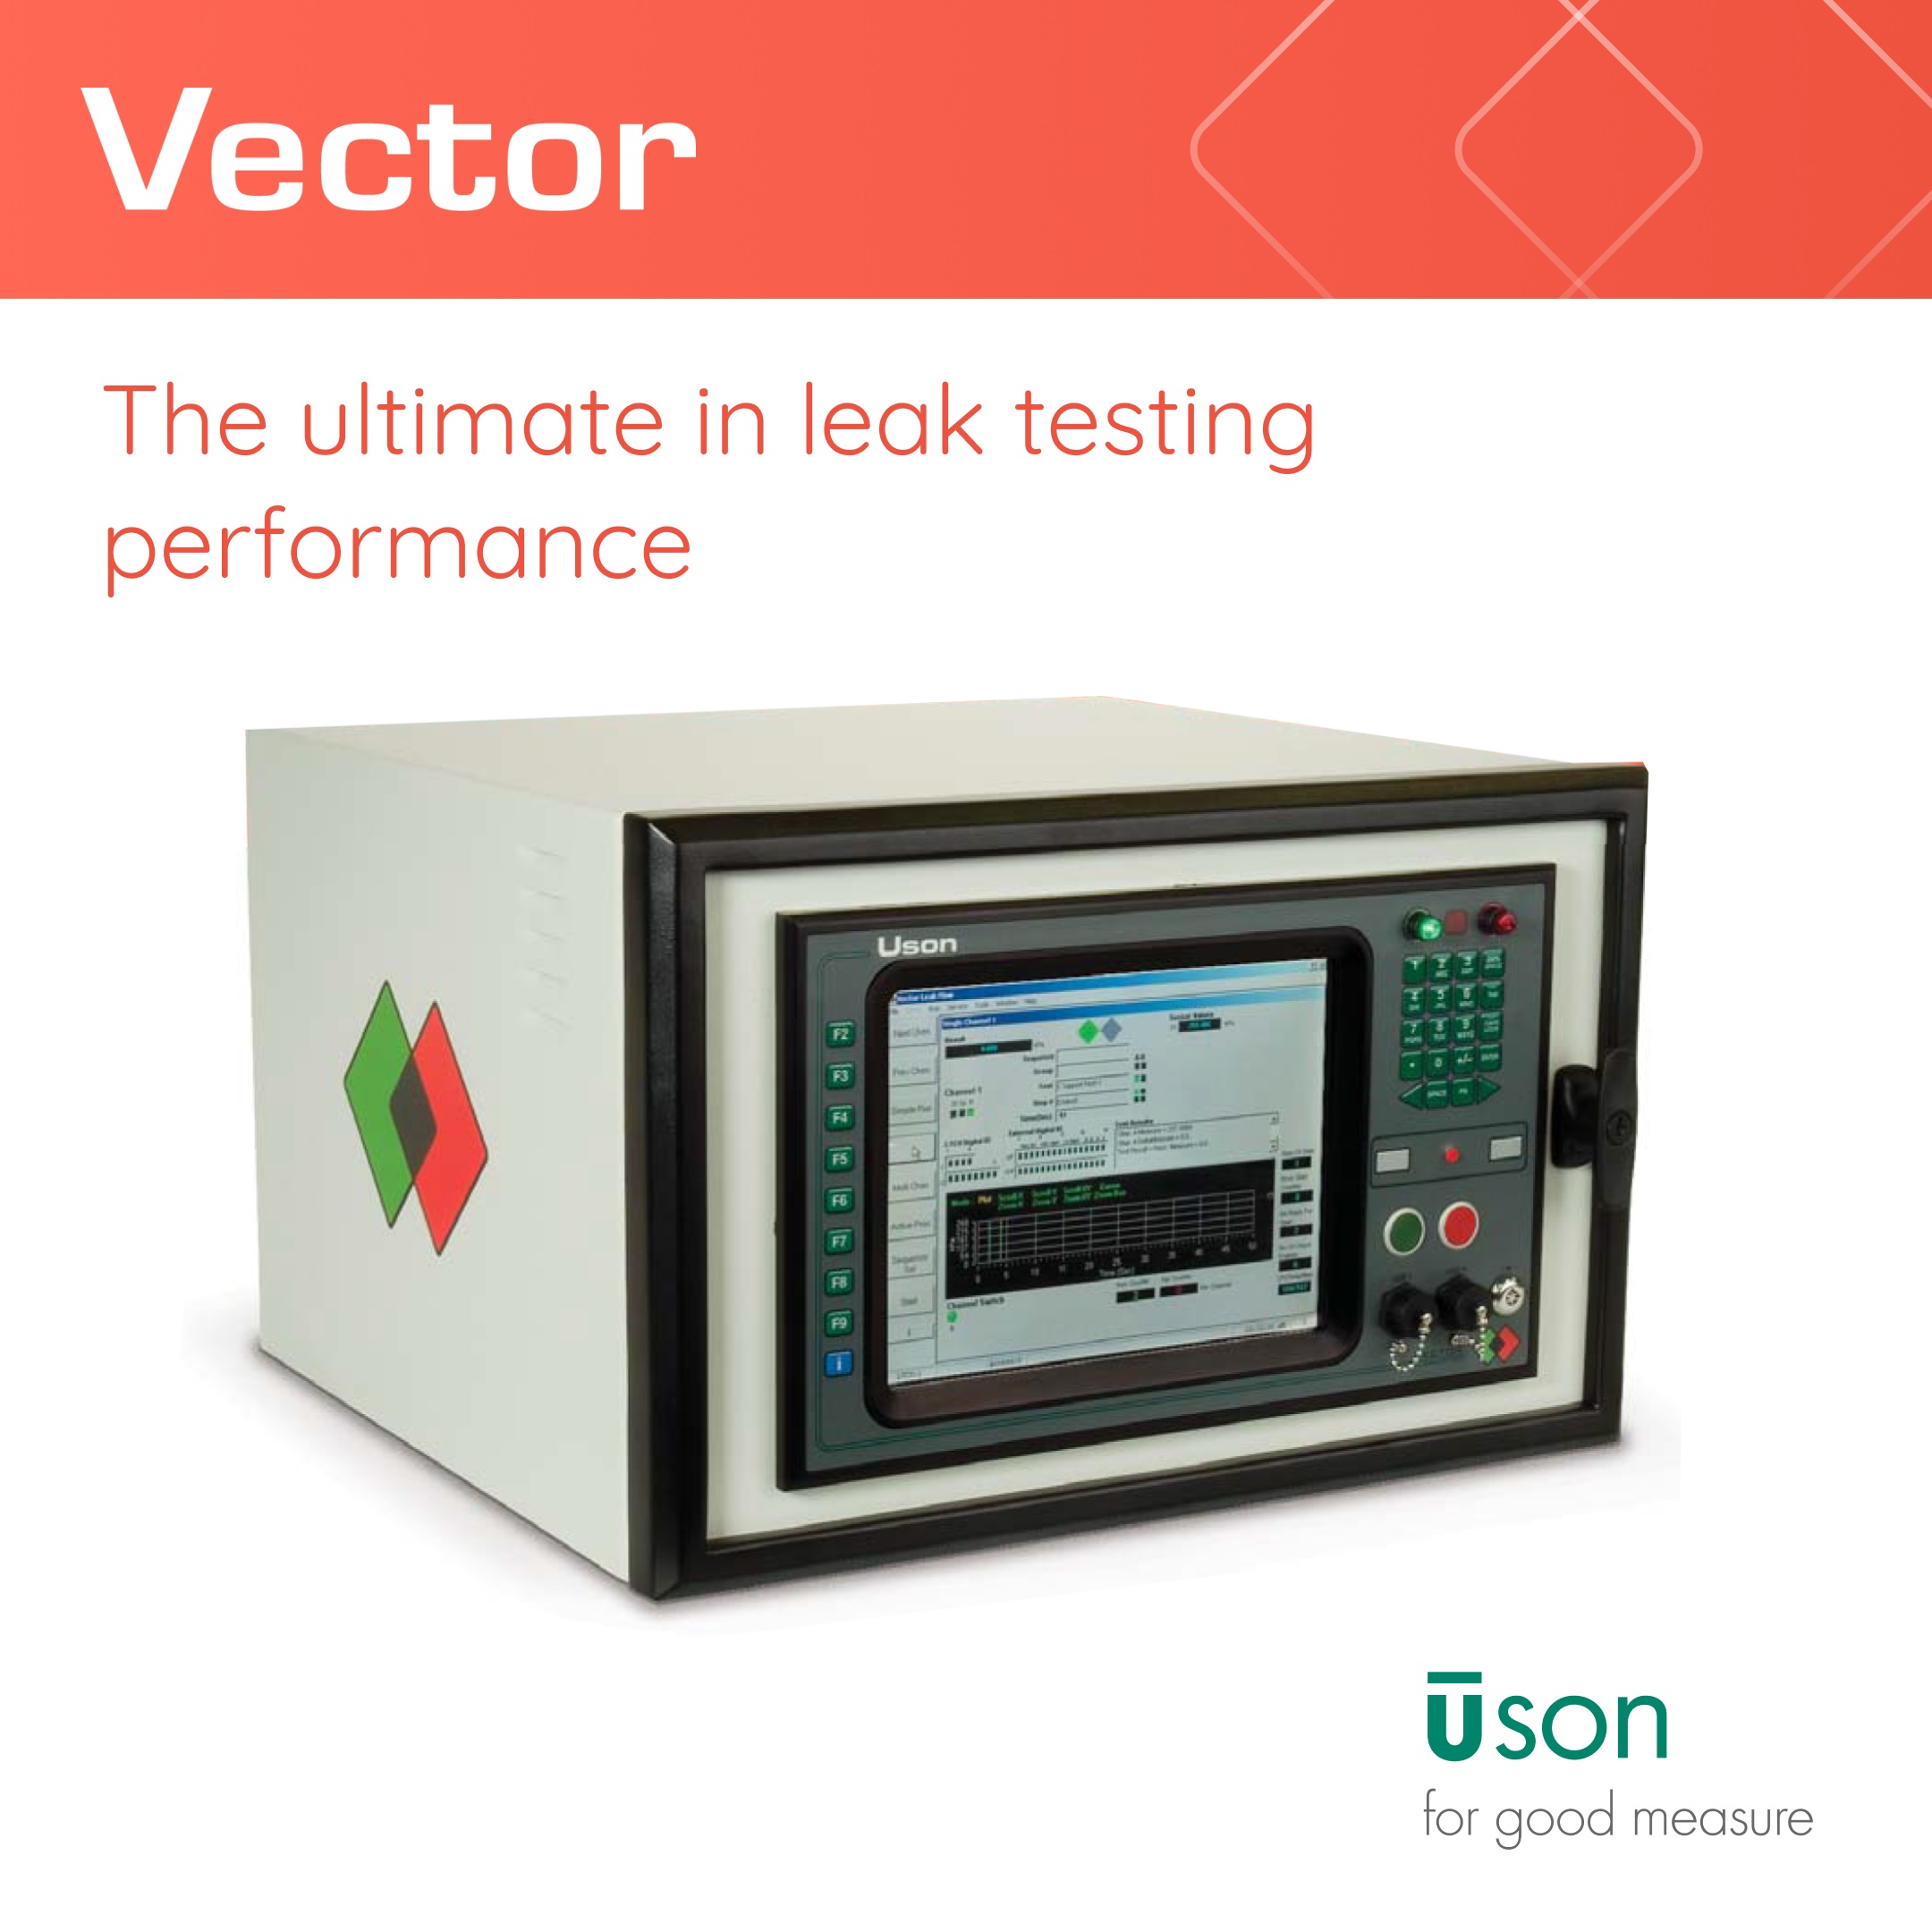 Vector leak testing